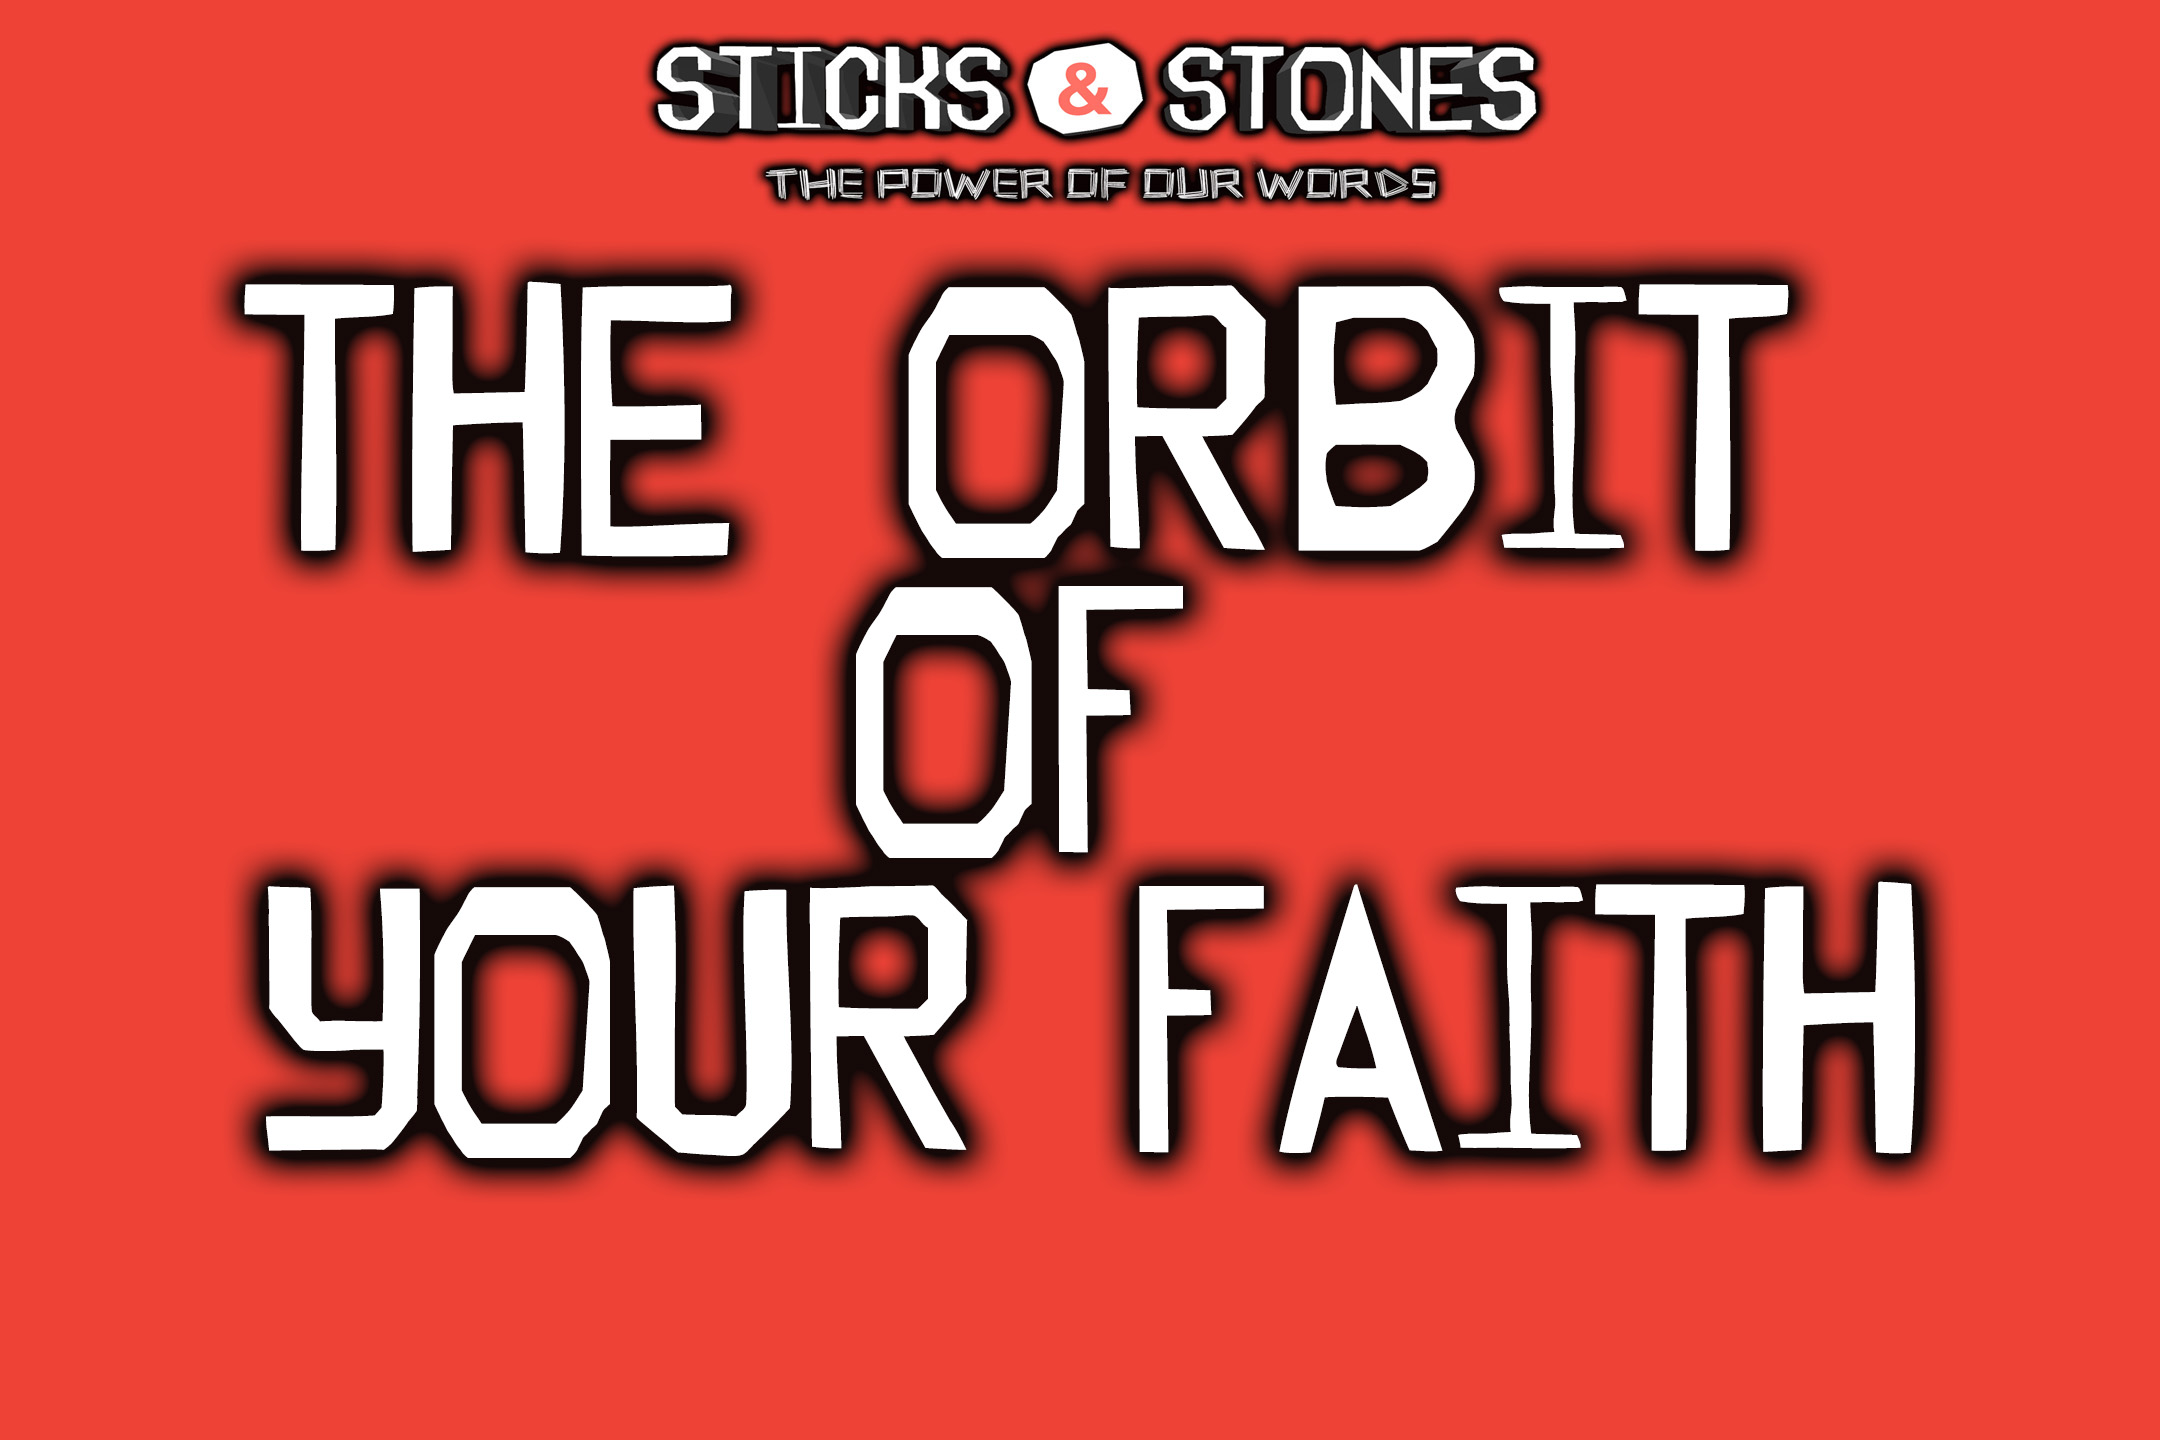 Pastor Will: Sticks and Stones 